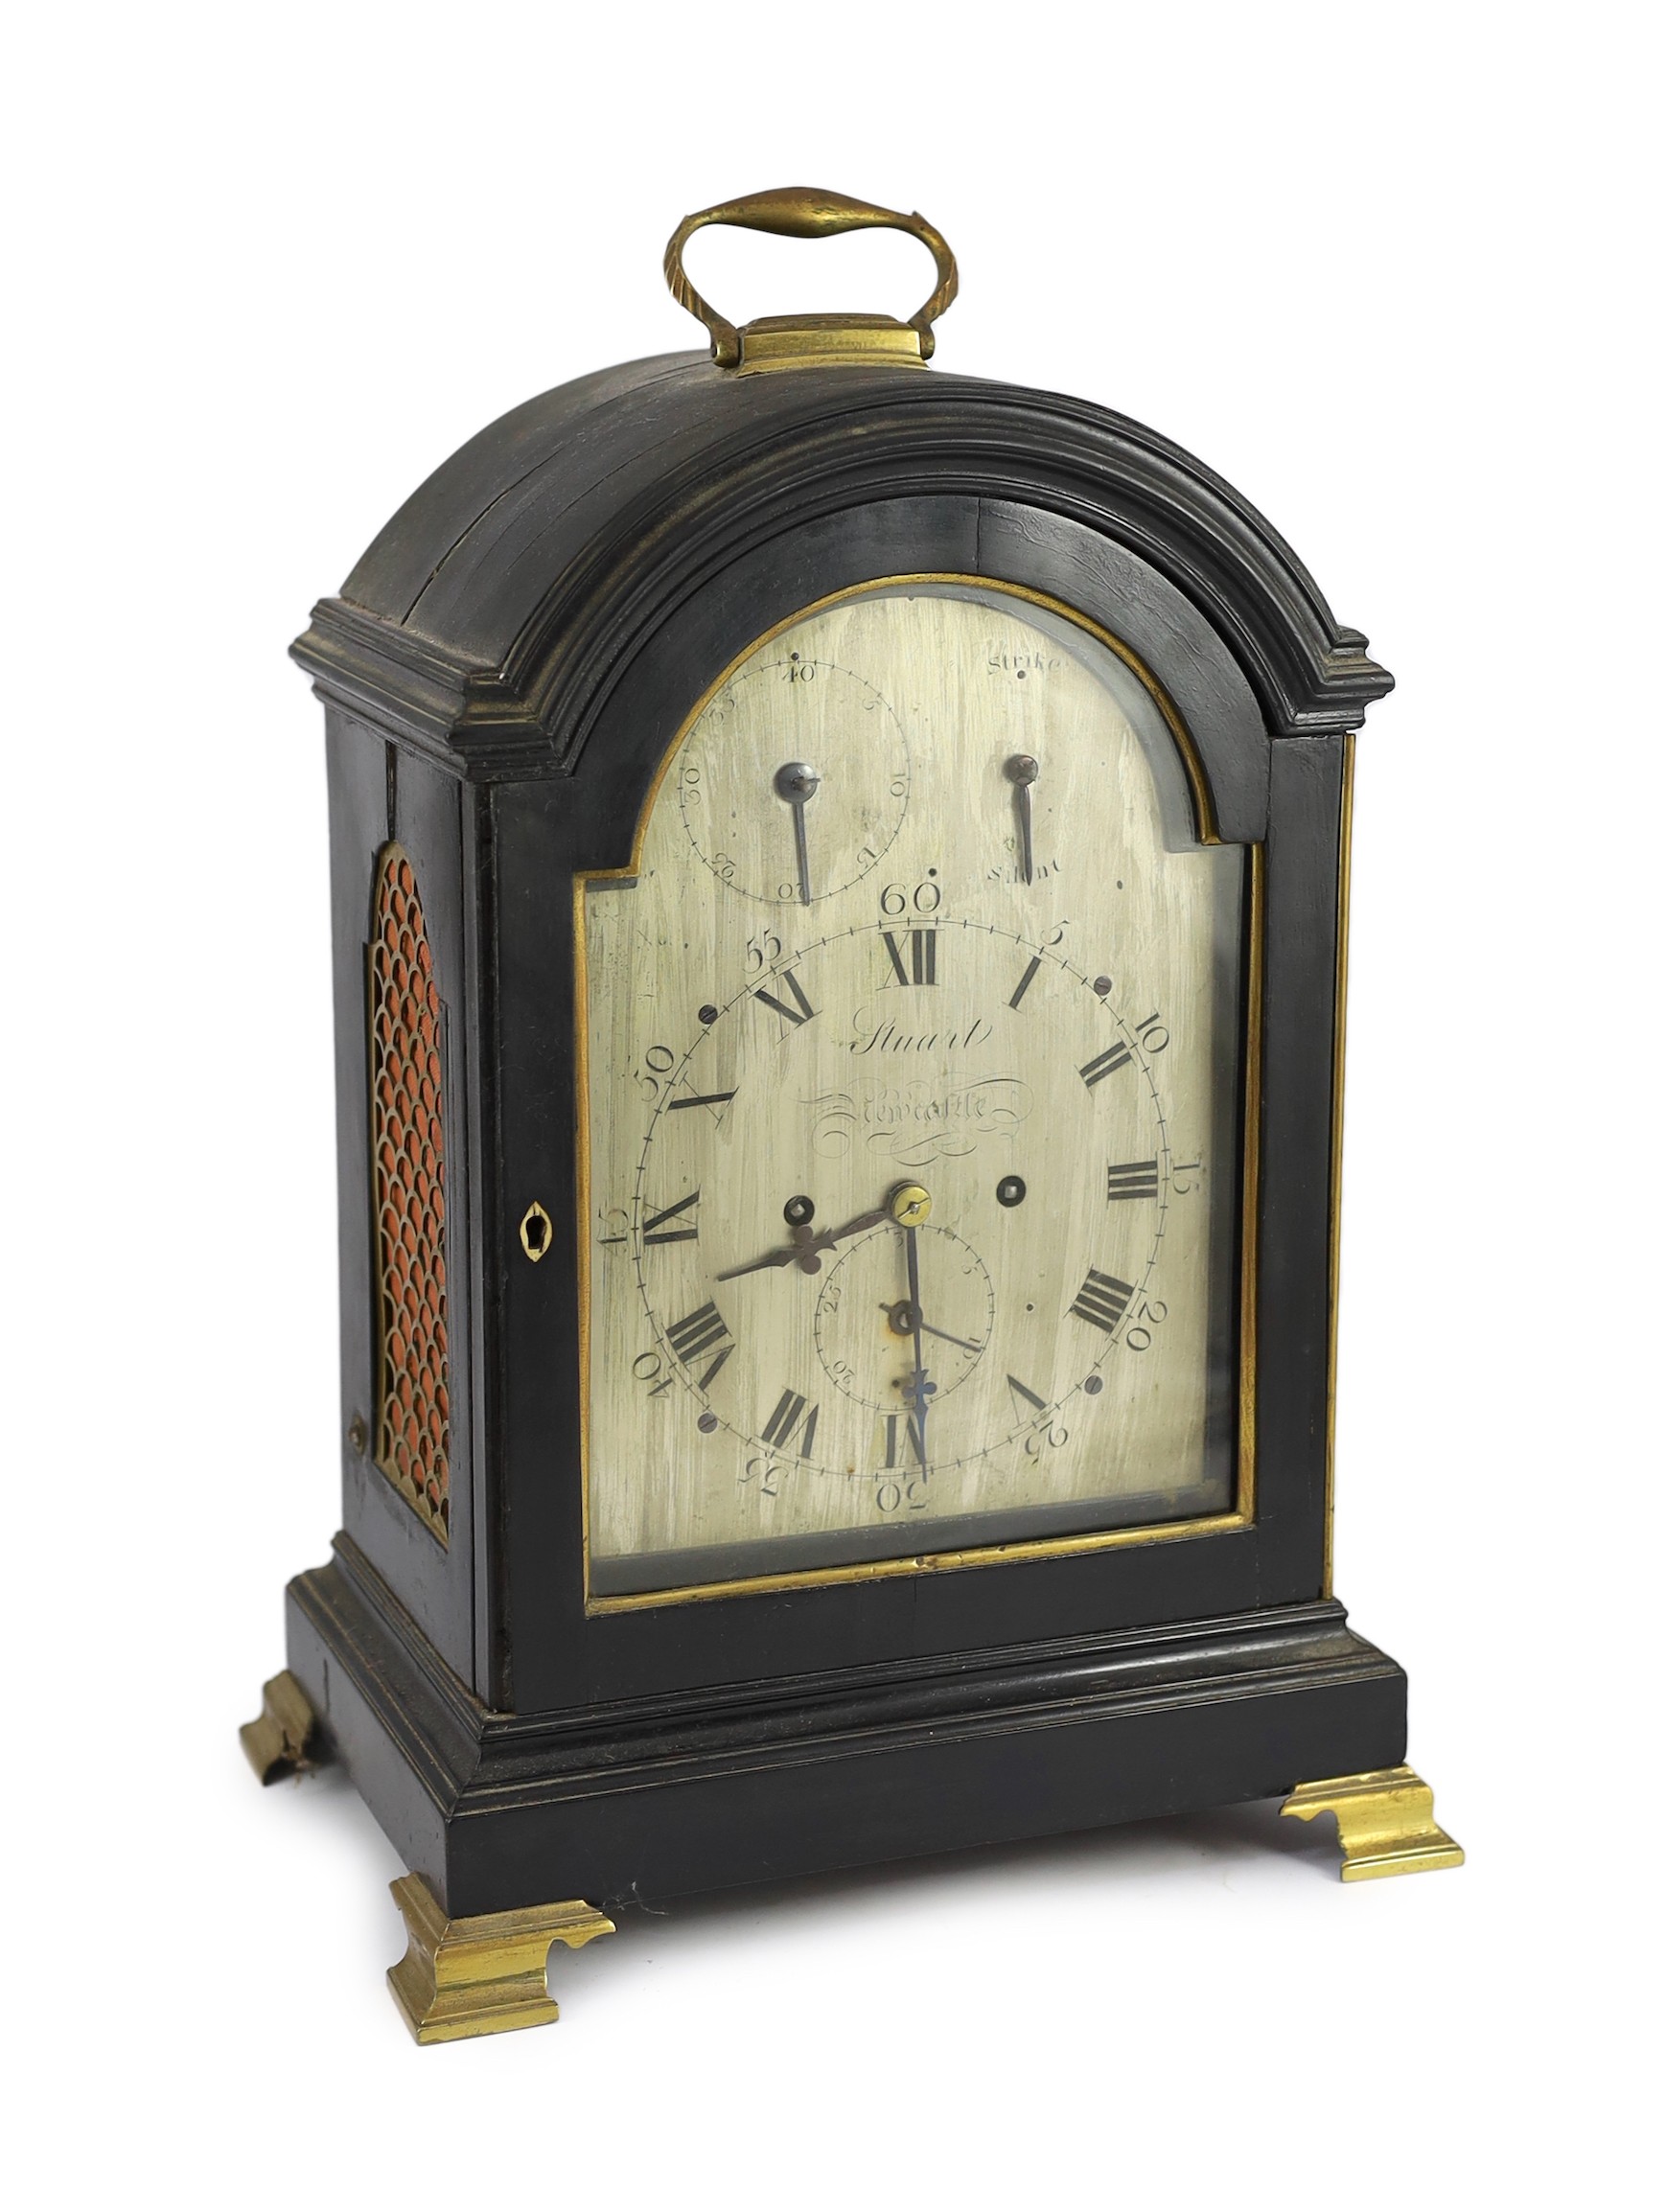 Stuart of Newcastle. A George III ebonised bracket clock, width 28cm depth 20cm height 41cm